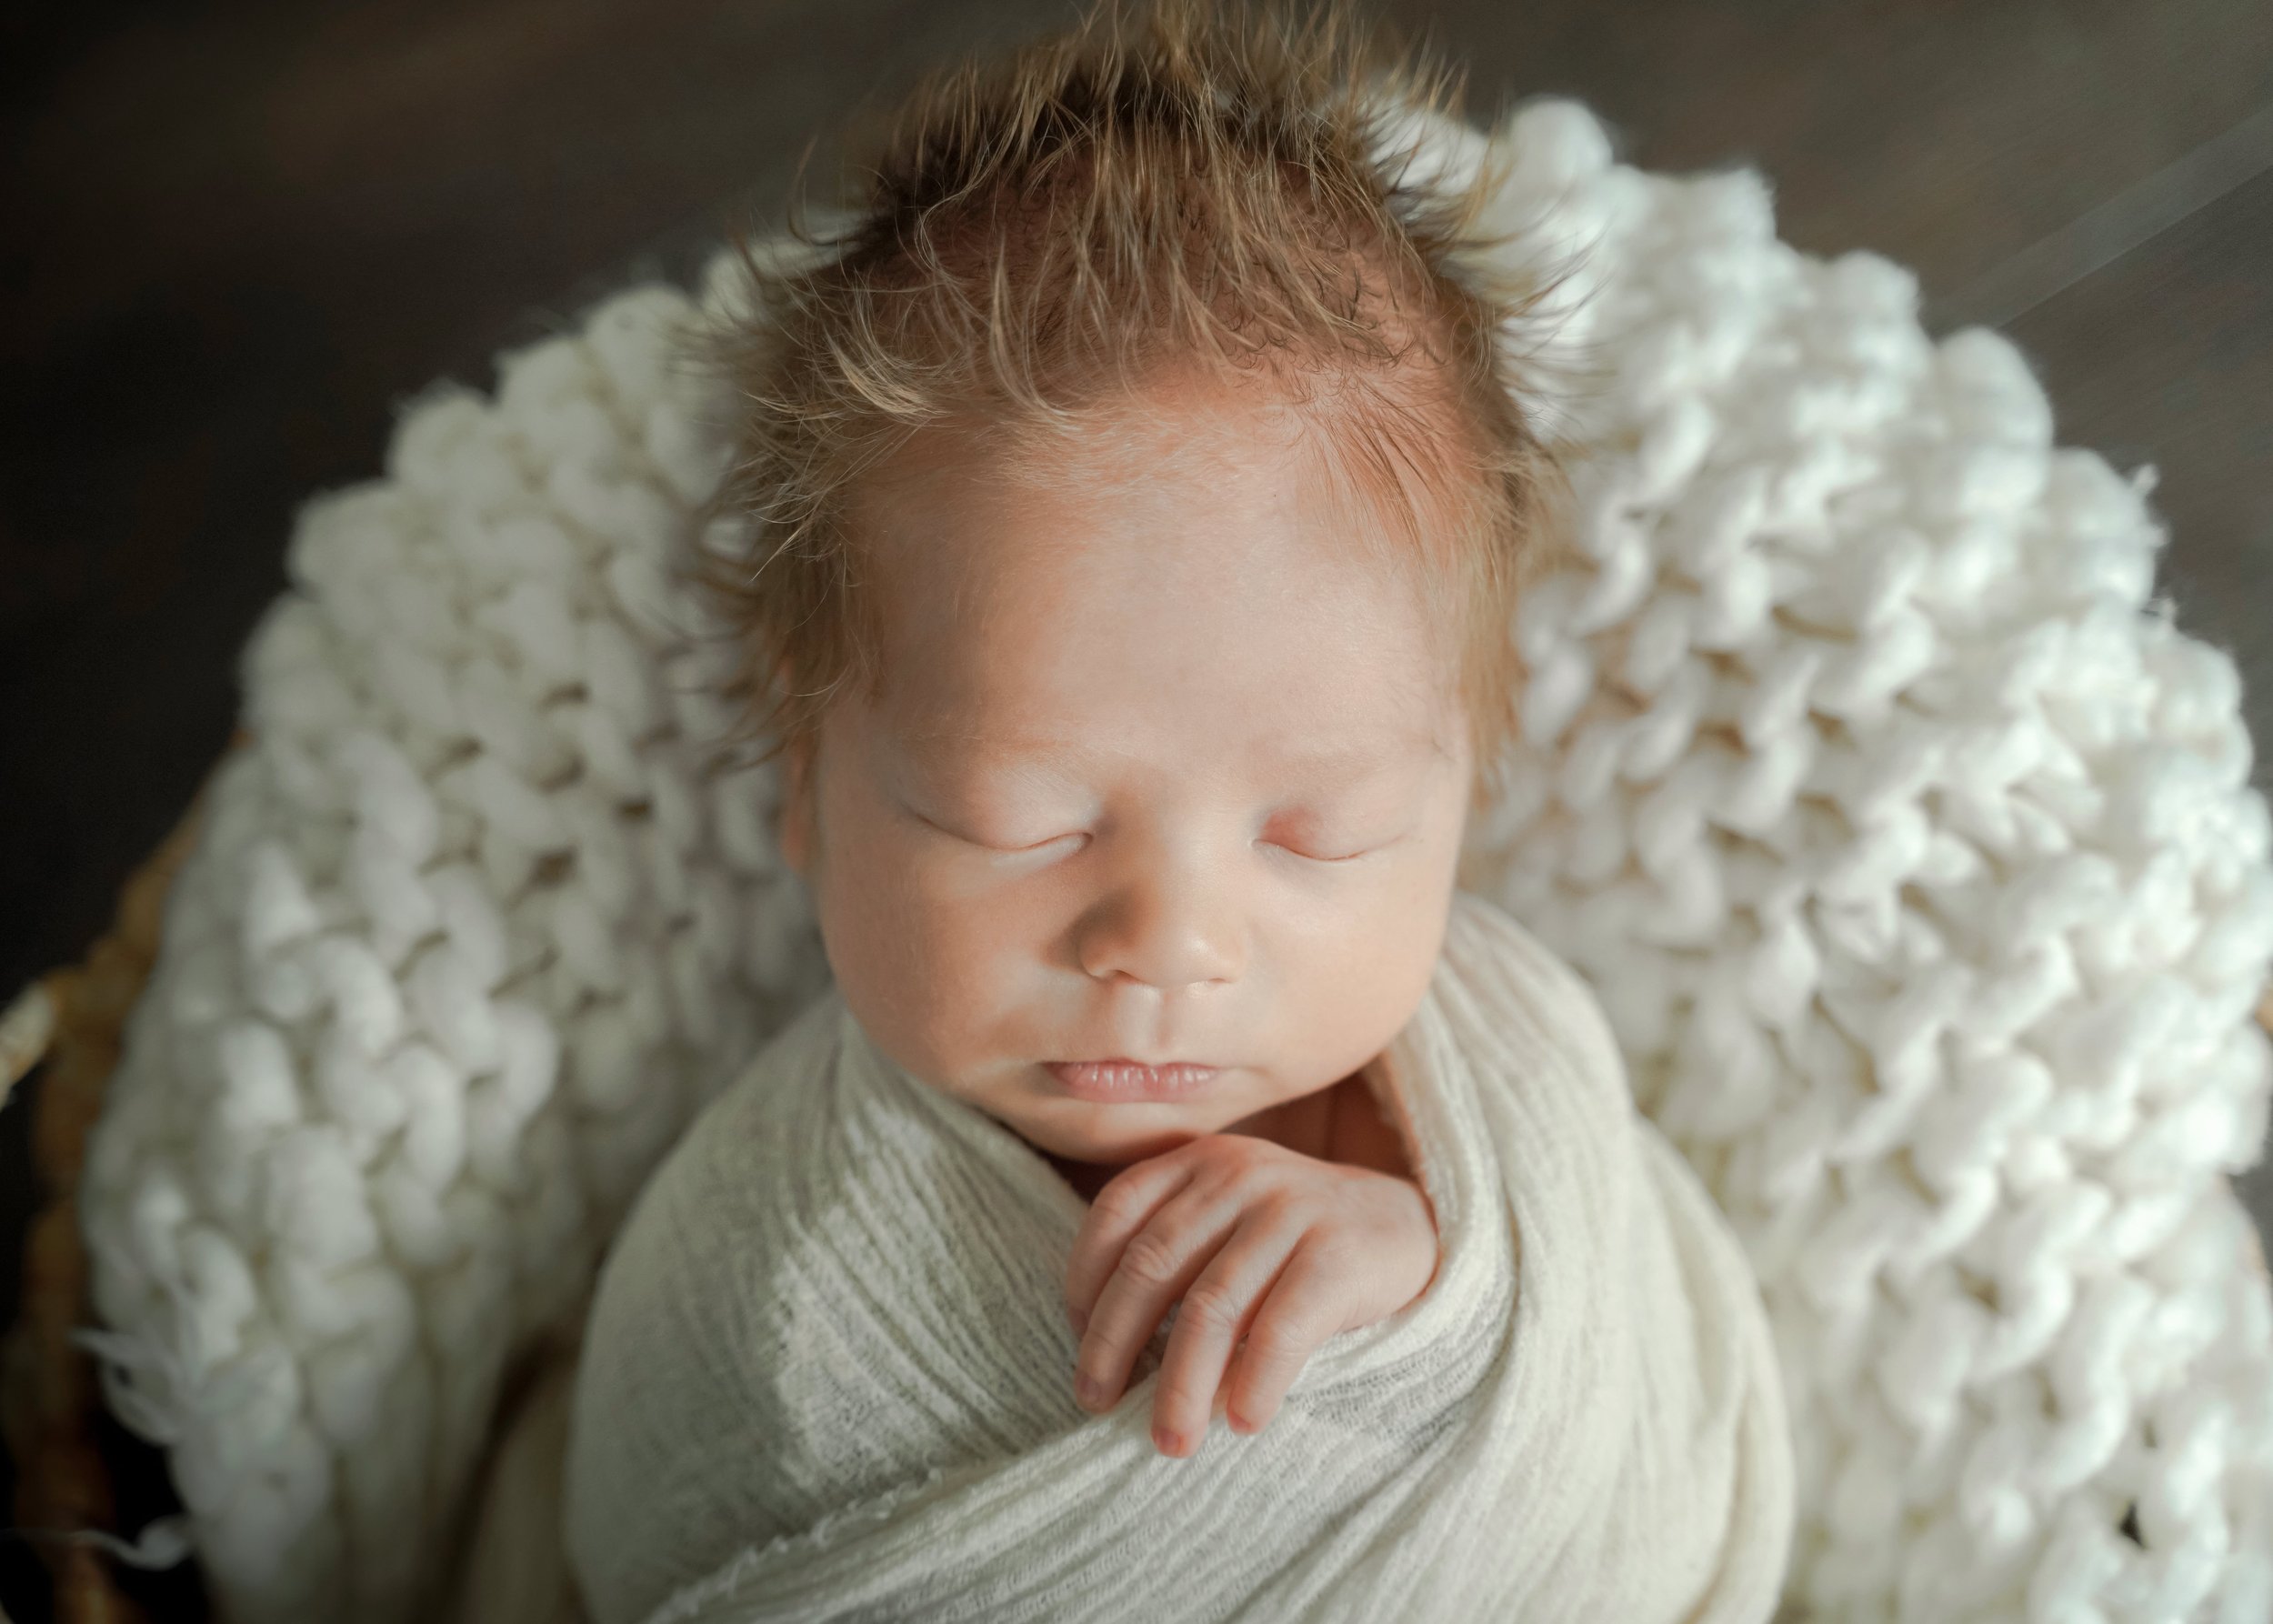 Newborn Baby with Long Hair